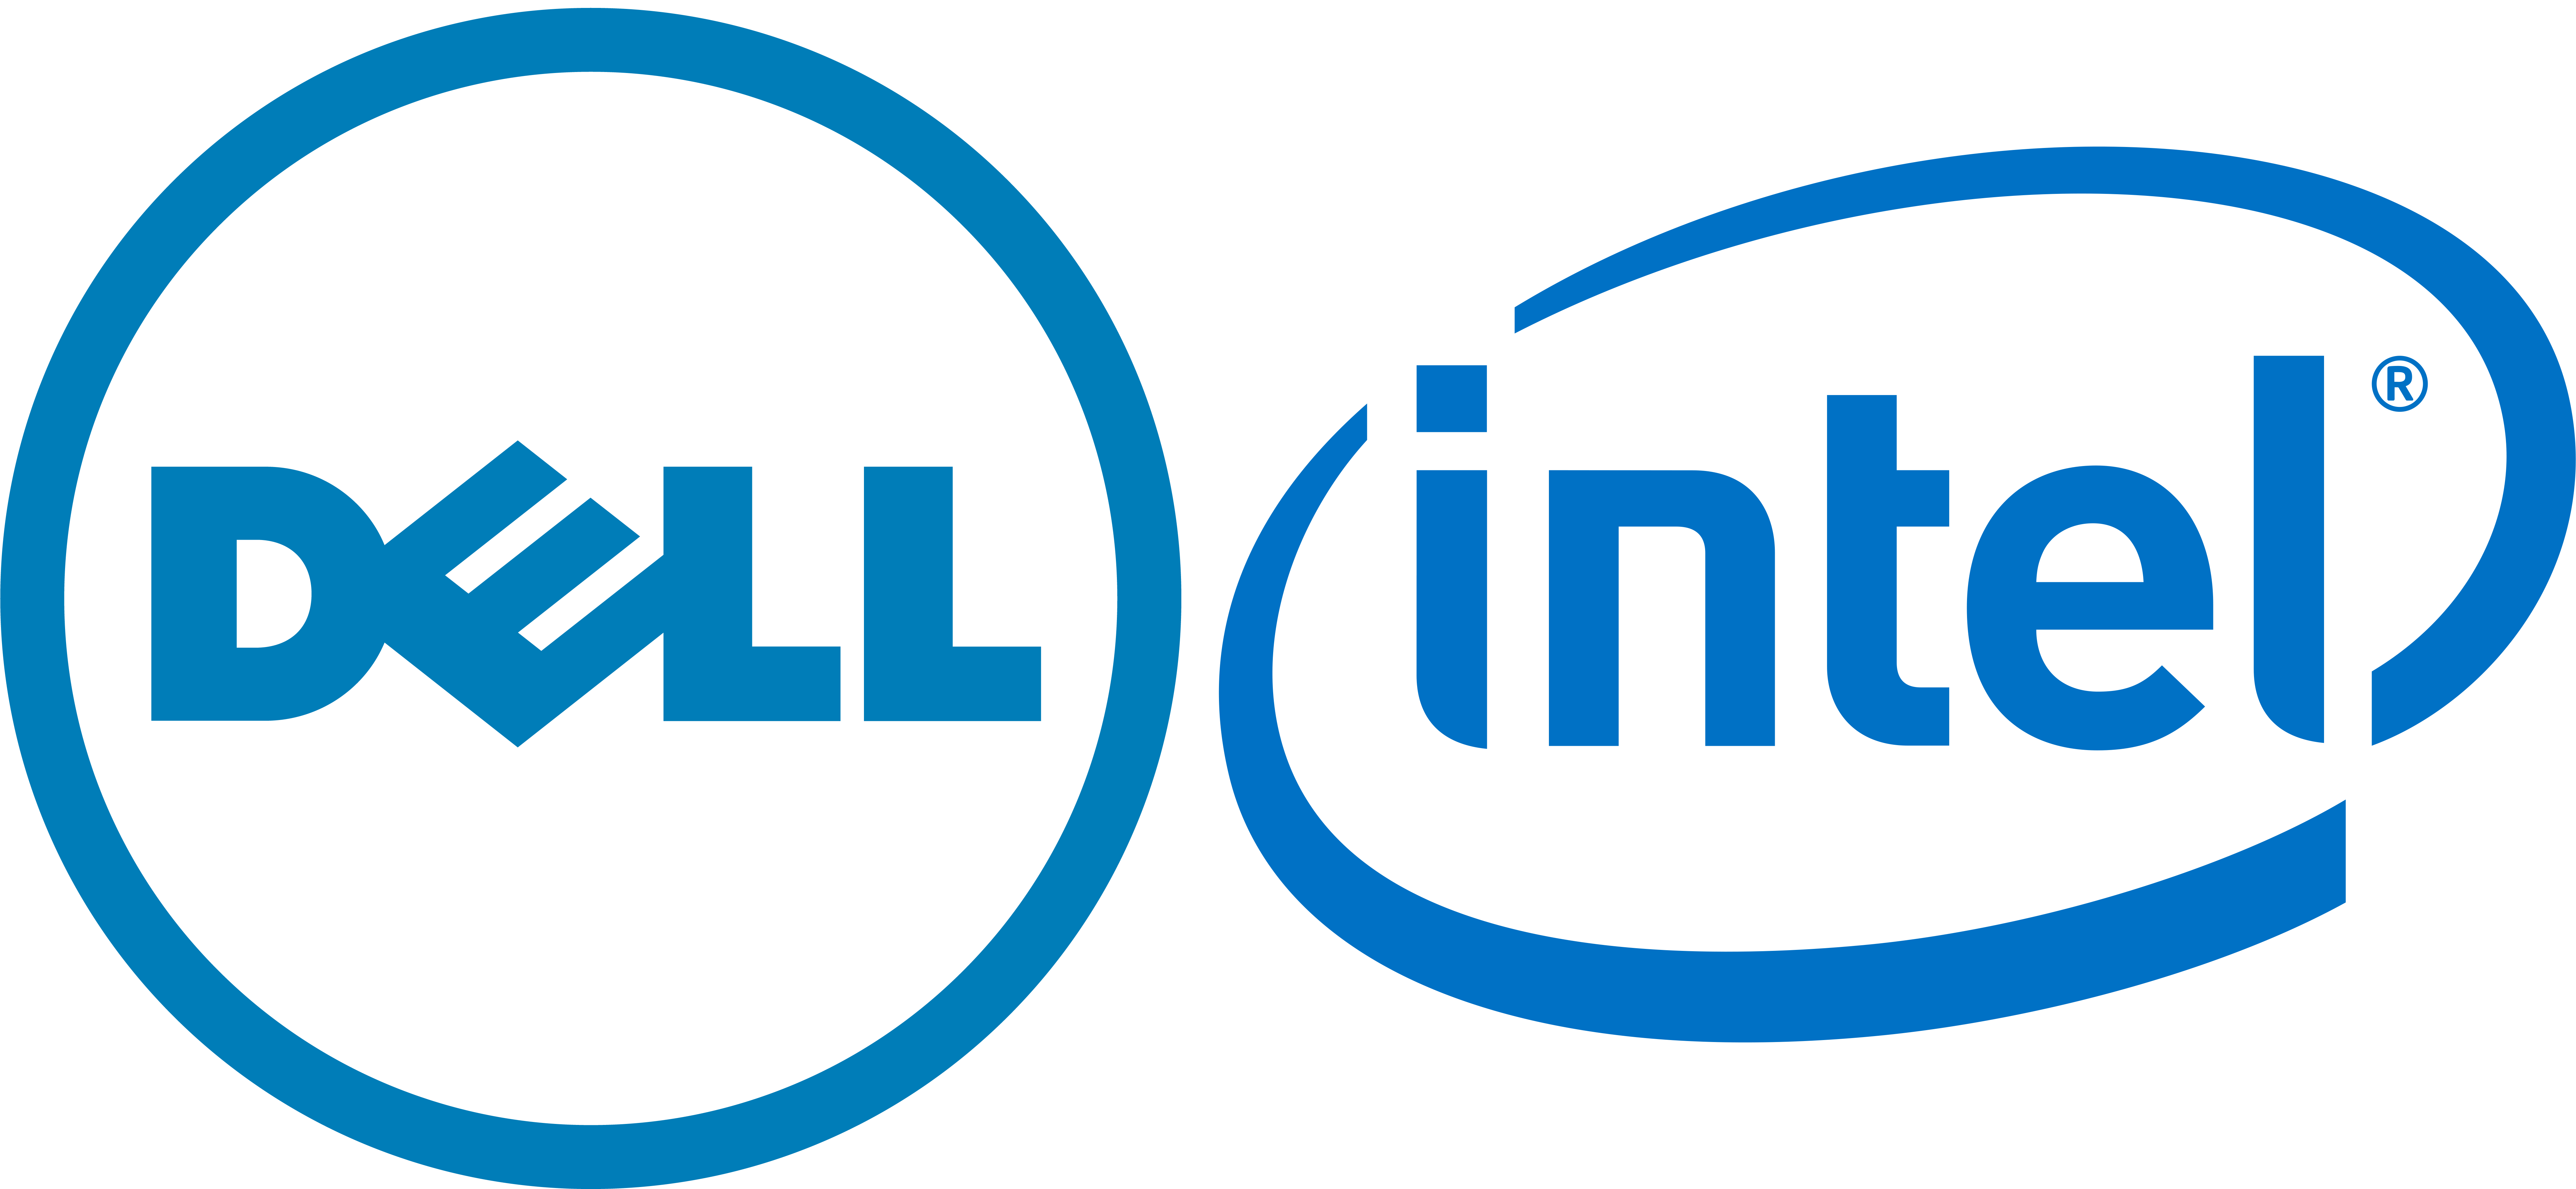 Логотип Intel. Логотип компании in. Надпись Интел. Логотип интела. Интел логотип